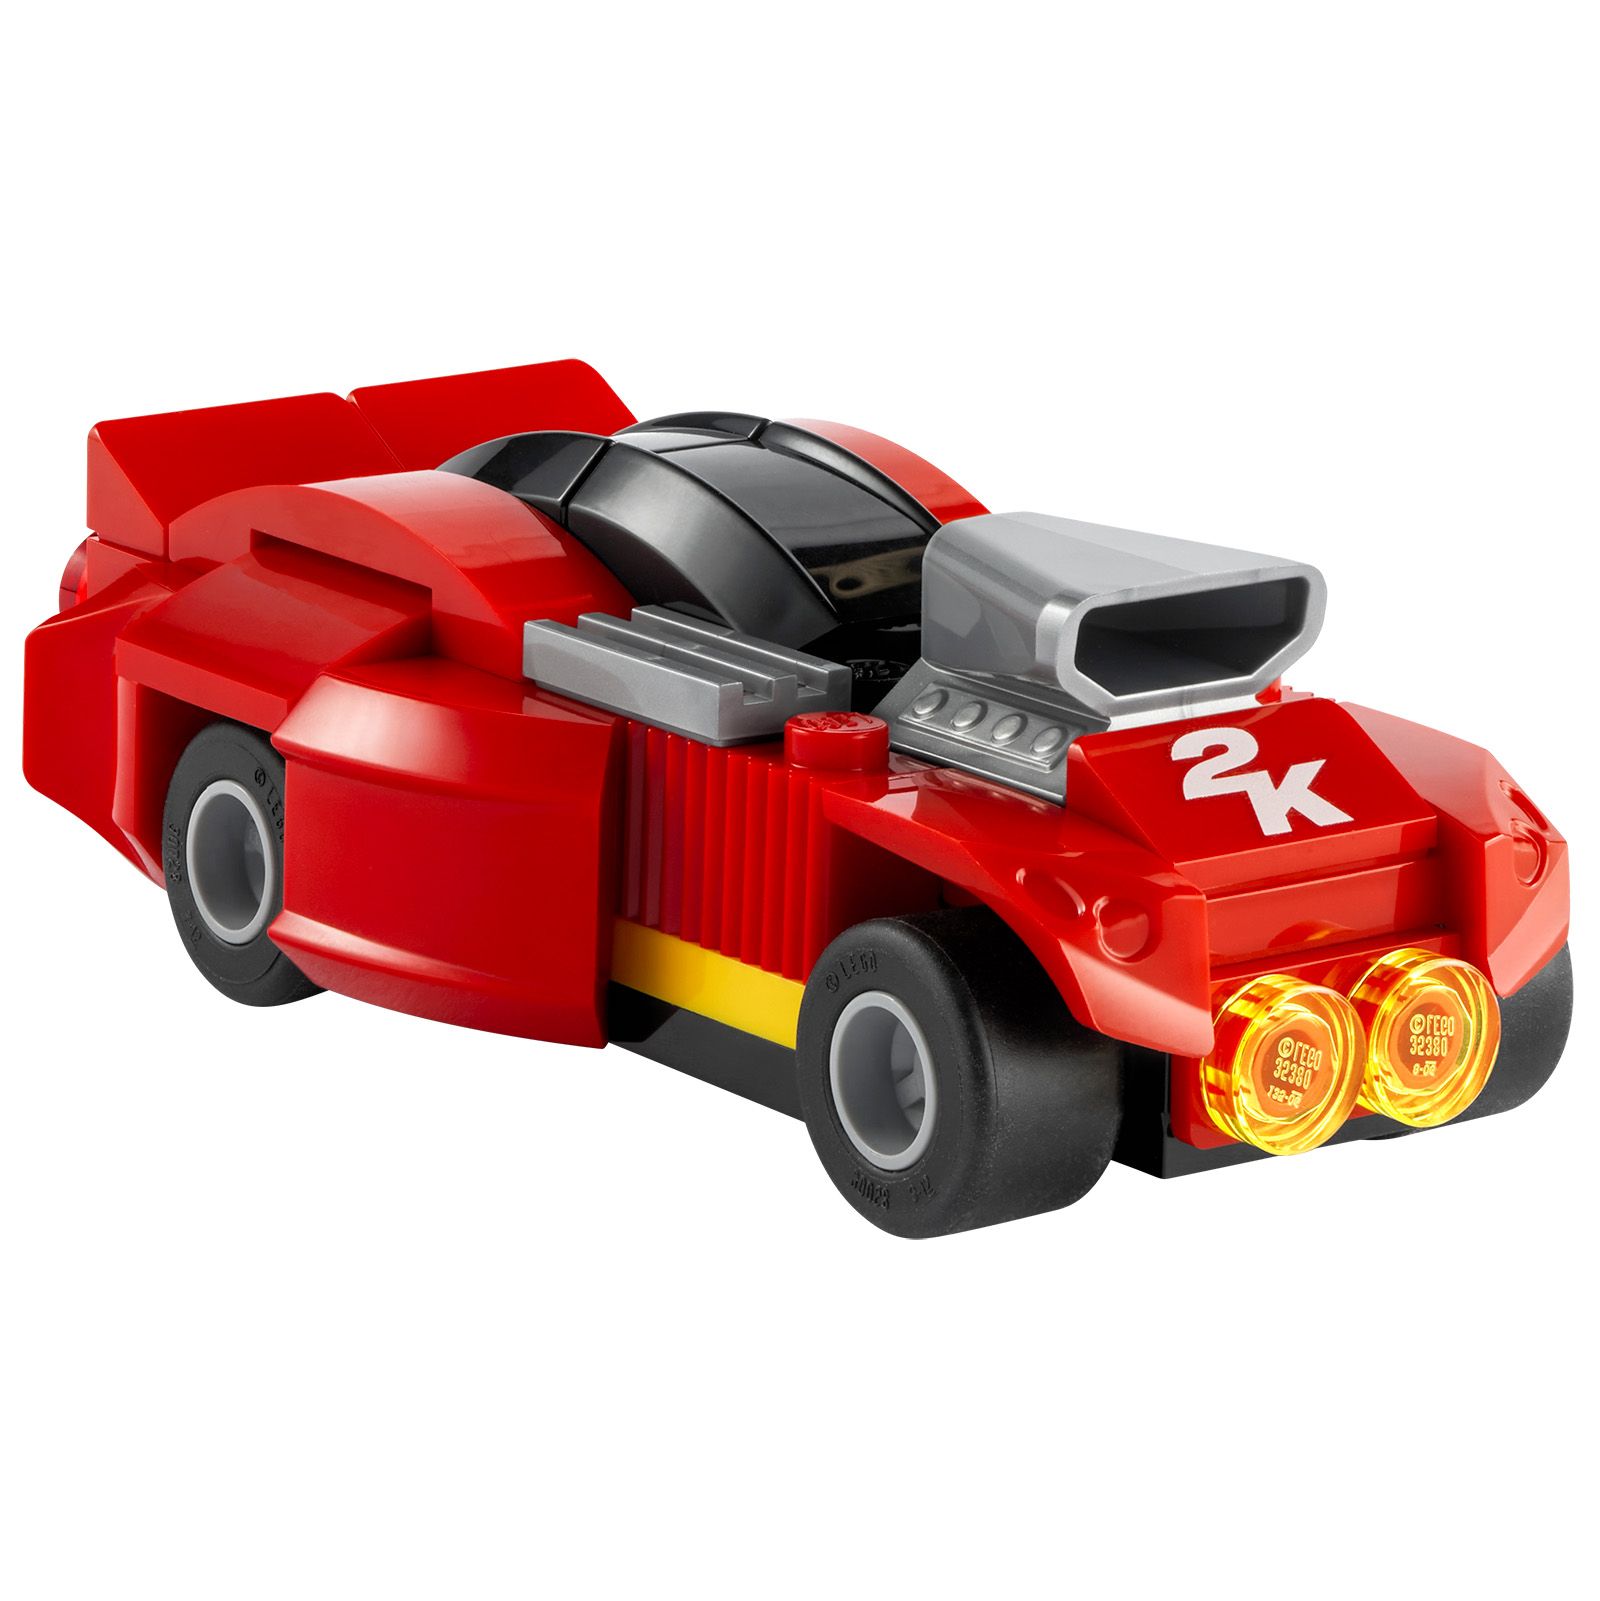 LEGO 2K Drive: טריילר ומוצר LEGO המוצעים עם גרסאות פיזיות מסוימות של משחק הווידאו